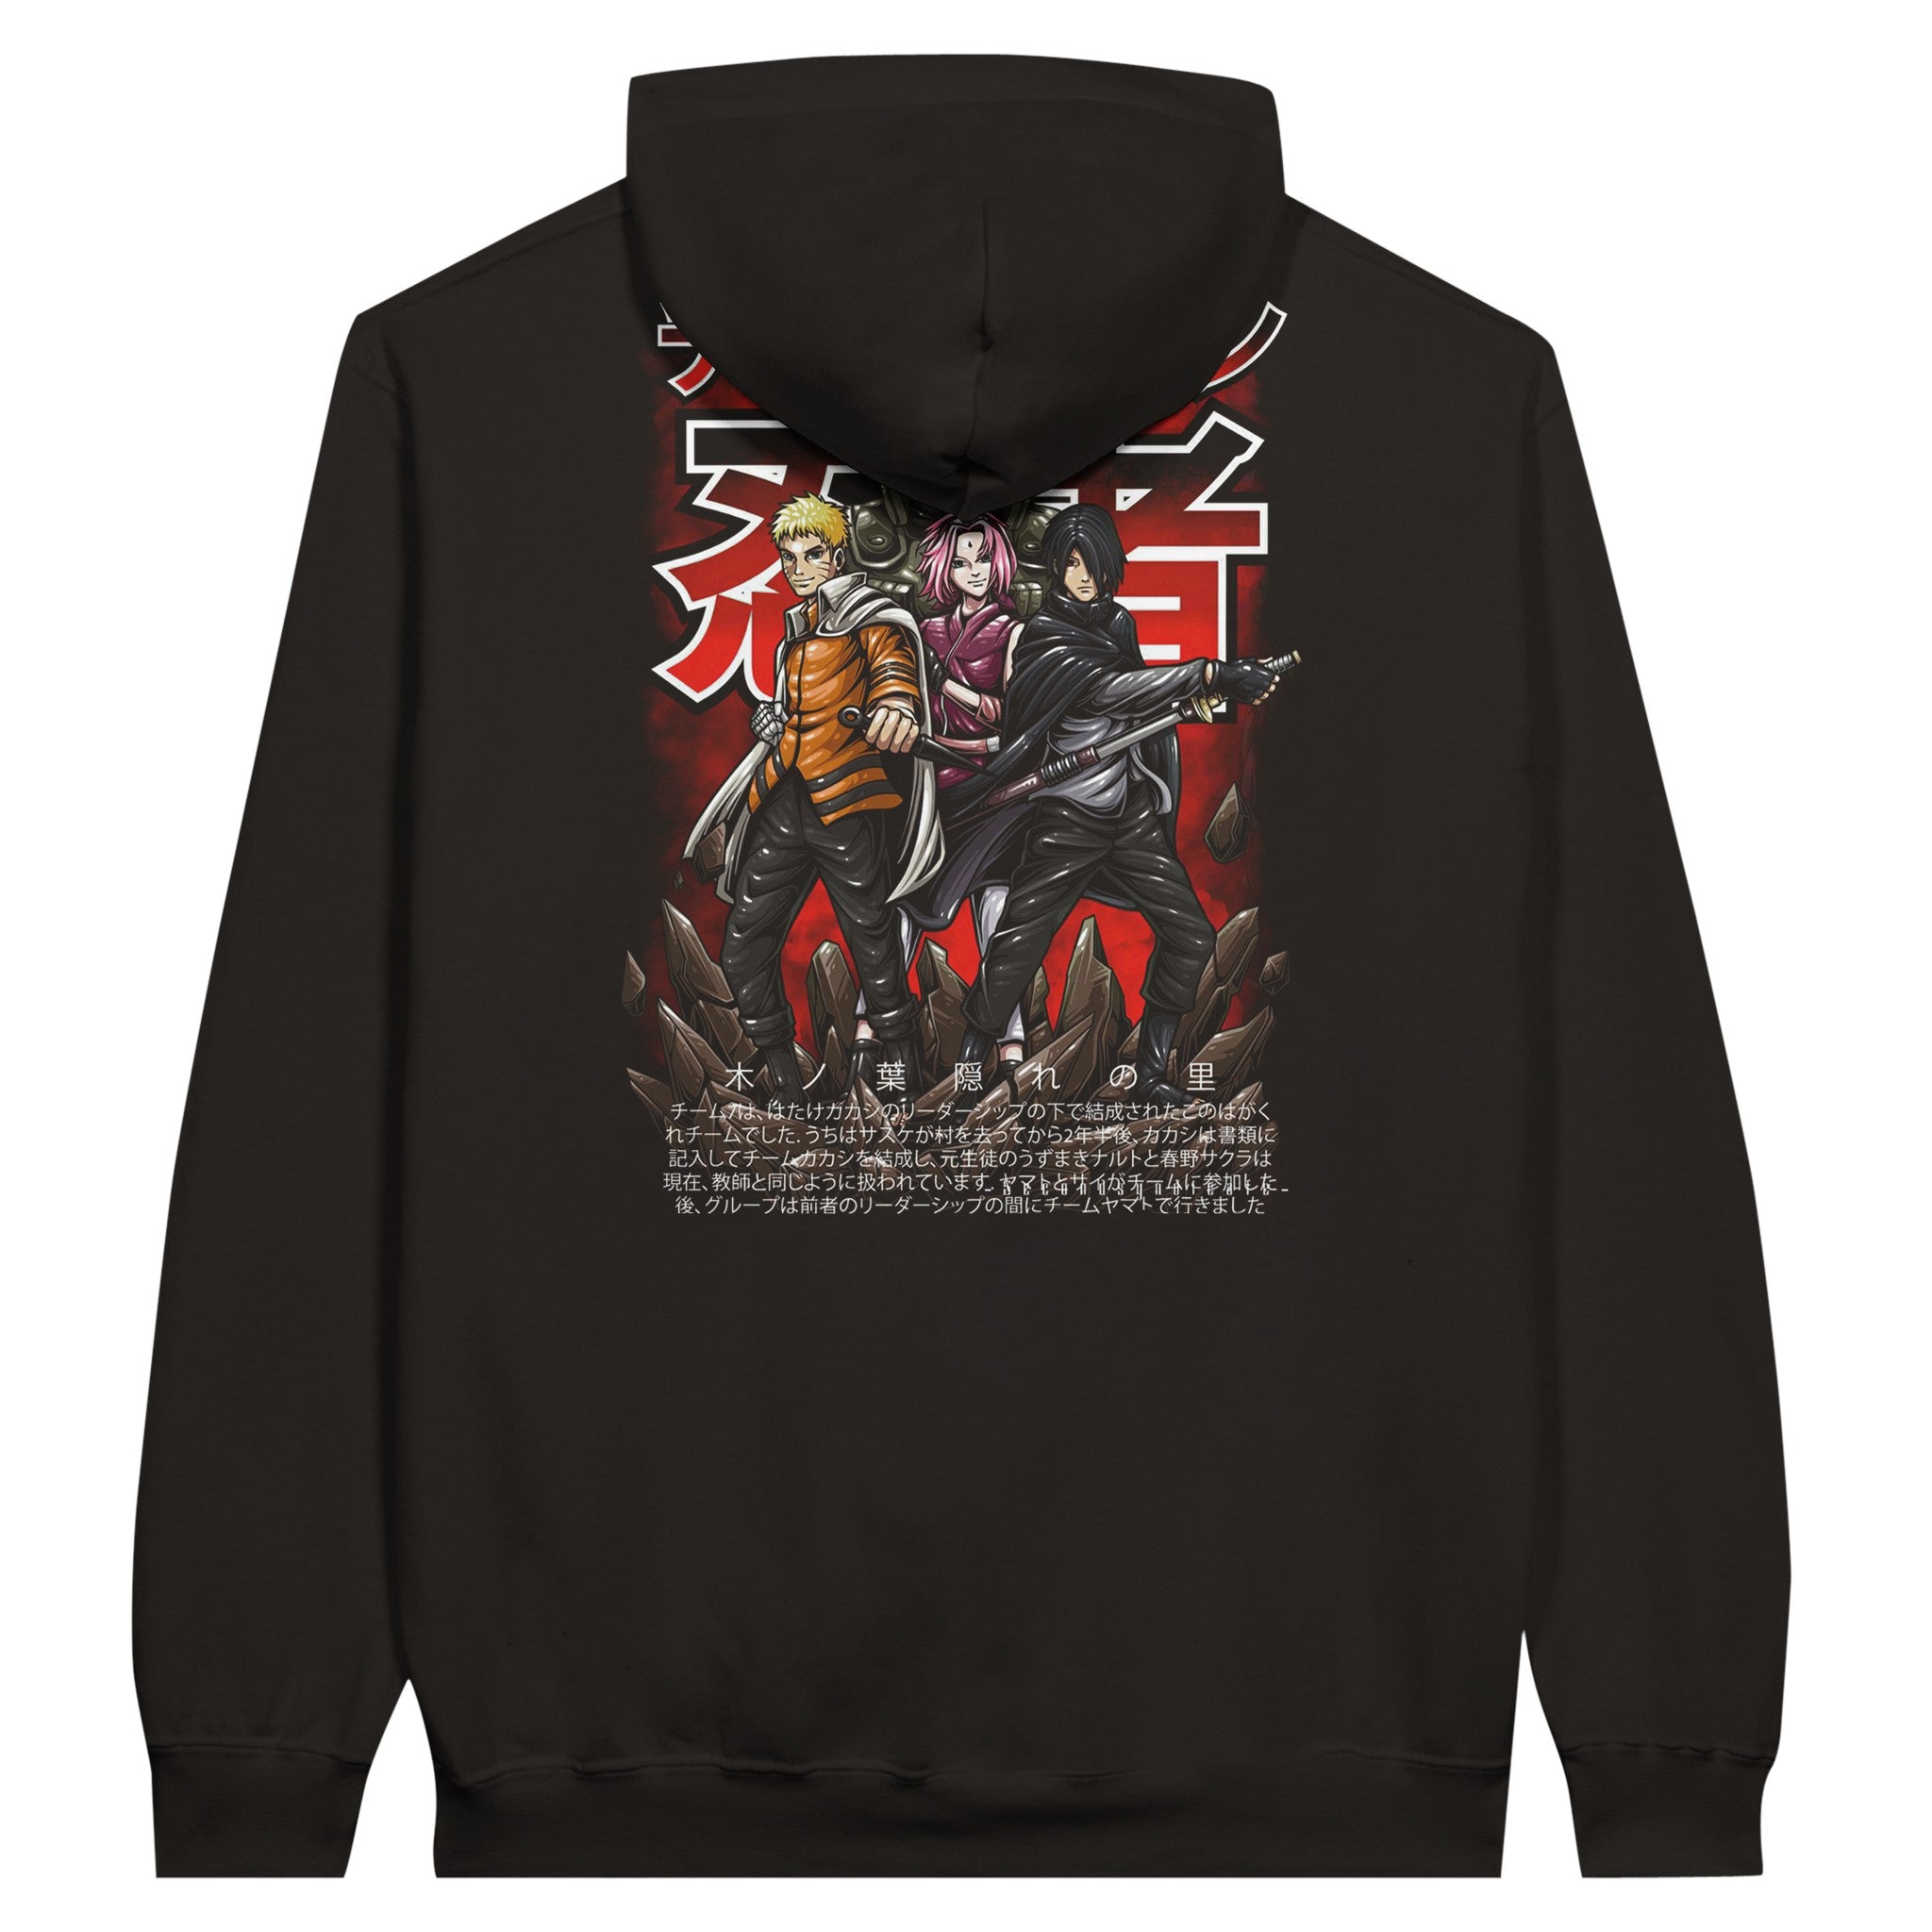 shop and buy naruto team 7 sasuke, sakura, kakashi anime clothing hoodie